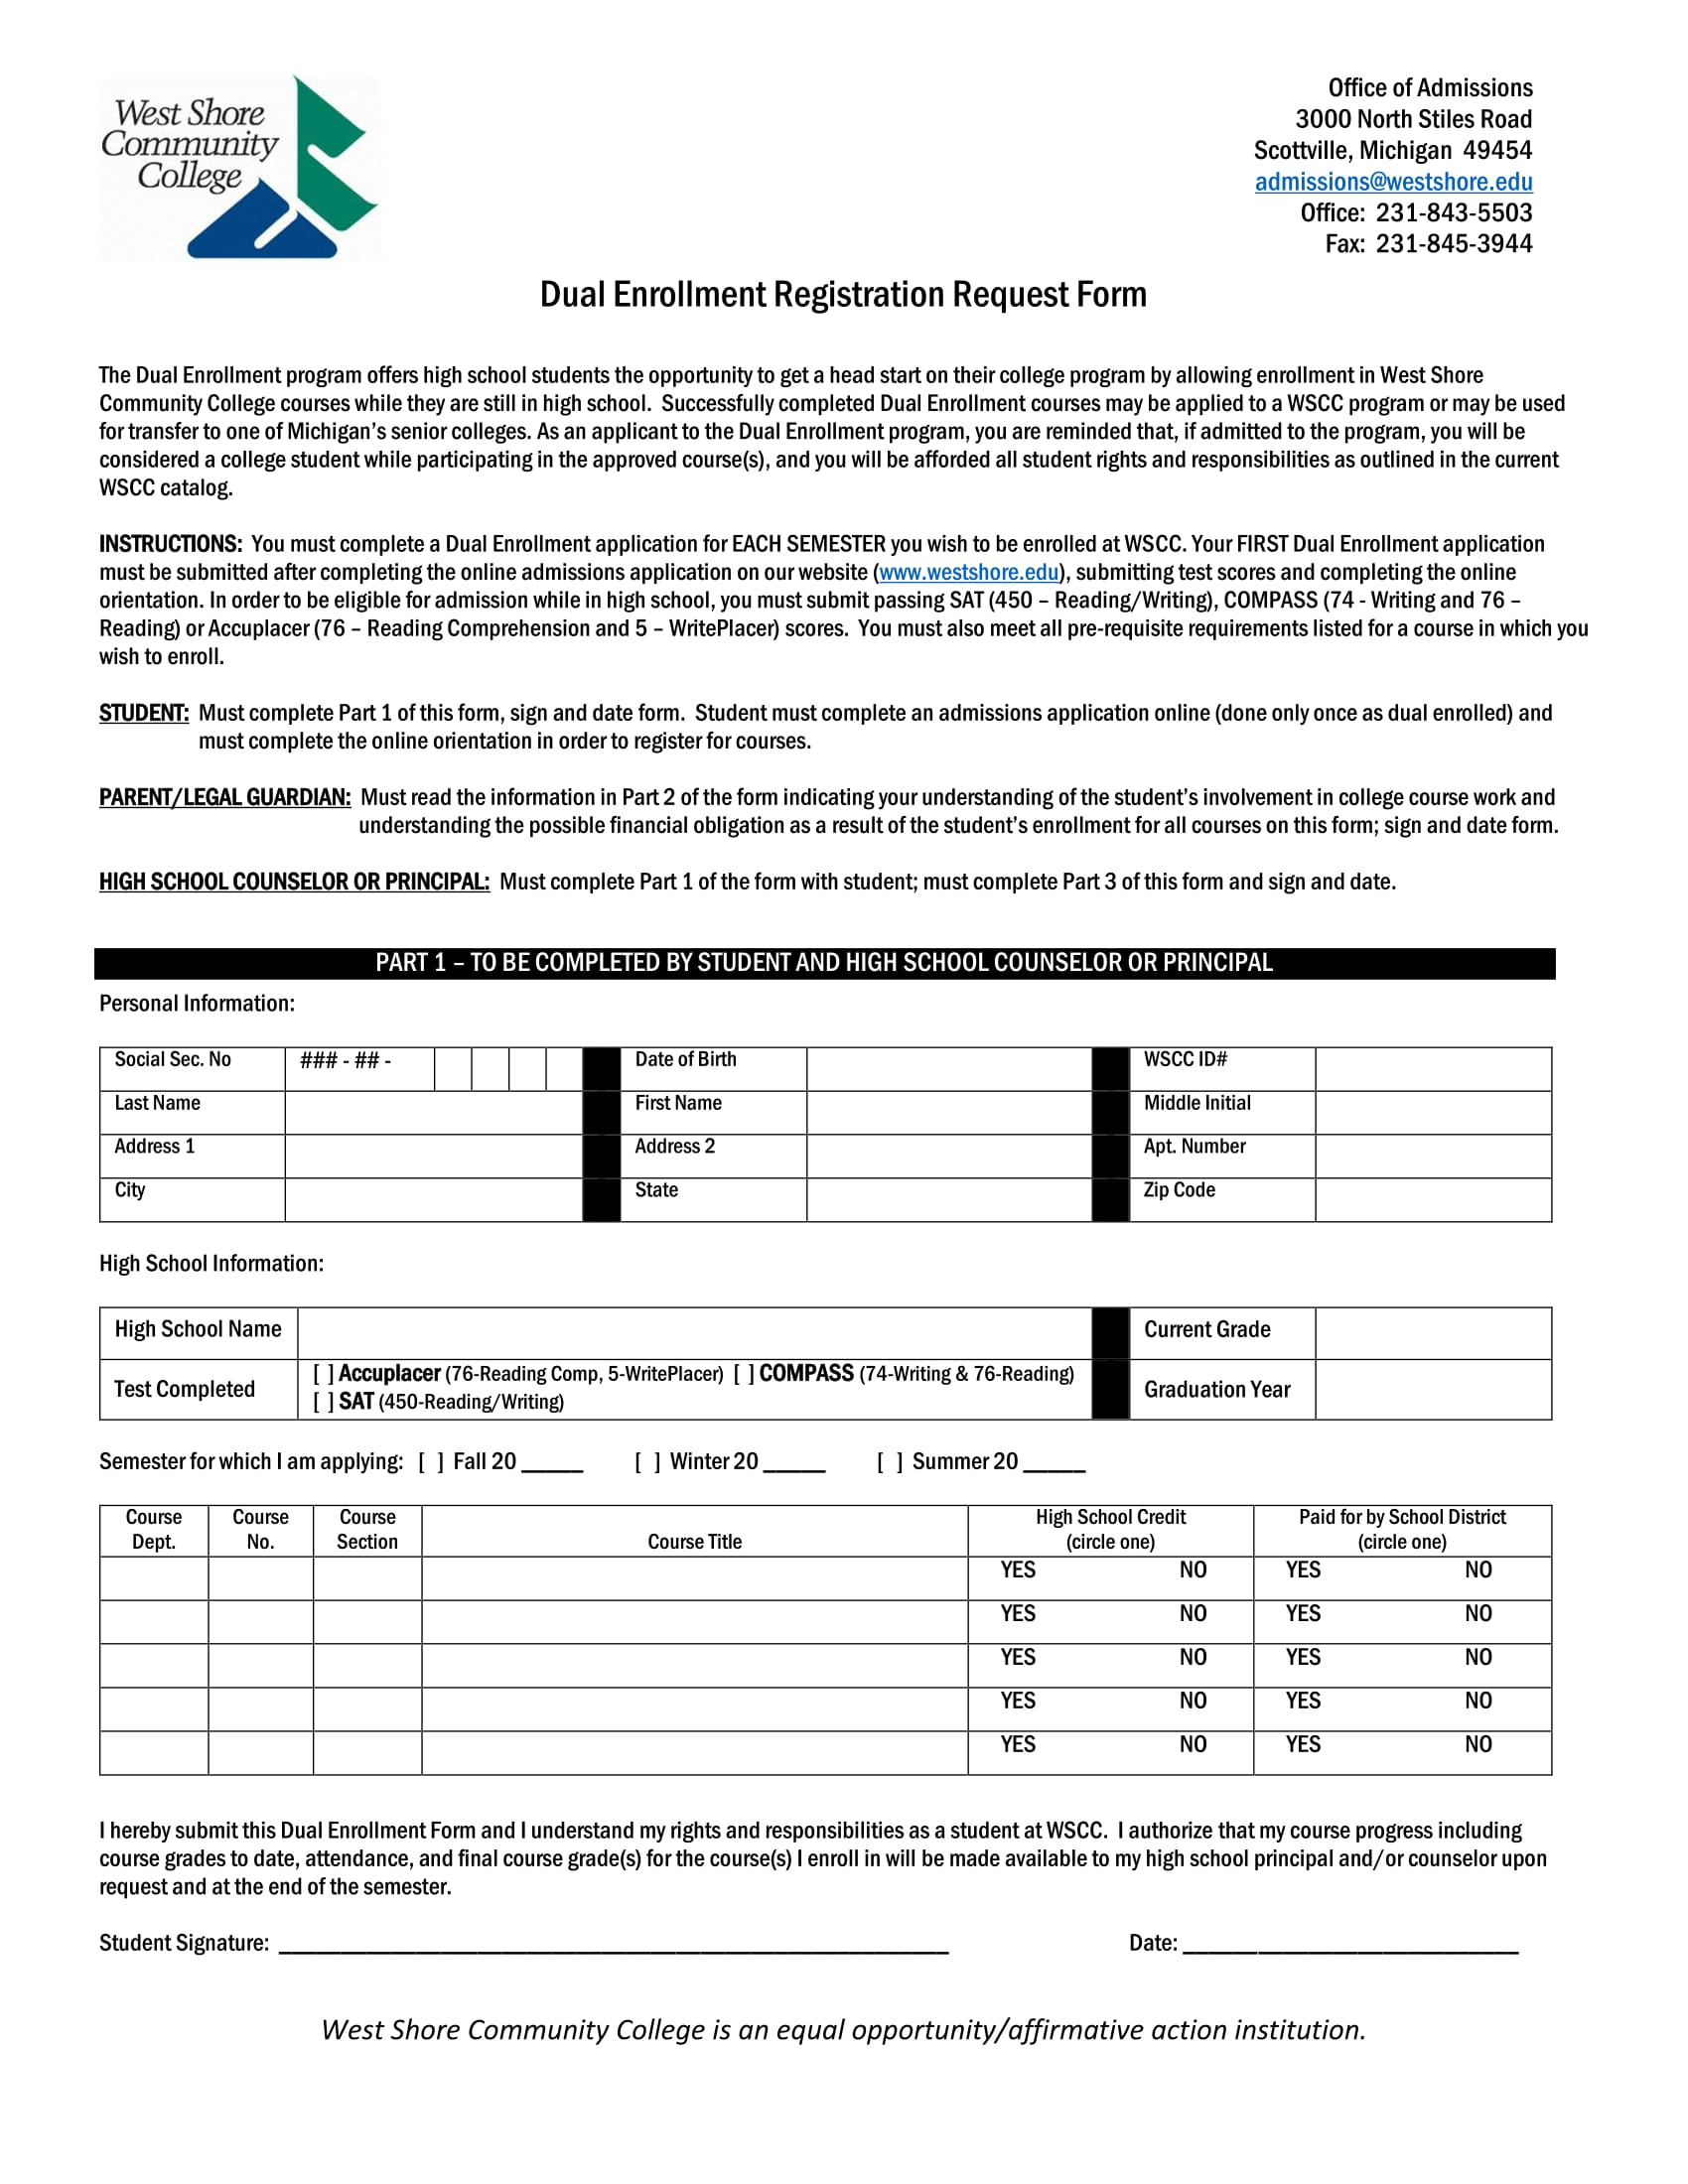 dual enrollment registration request form 1